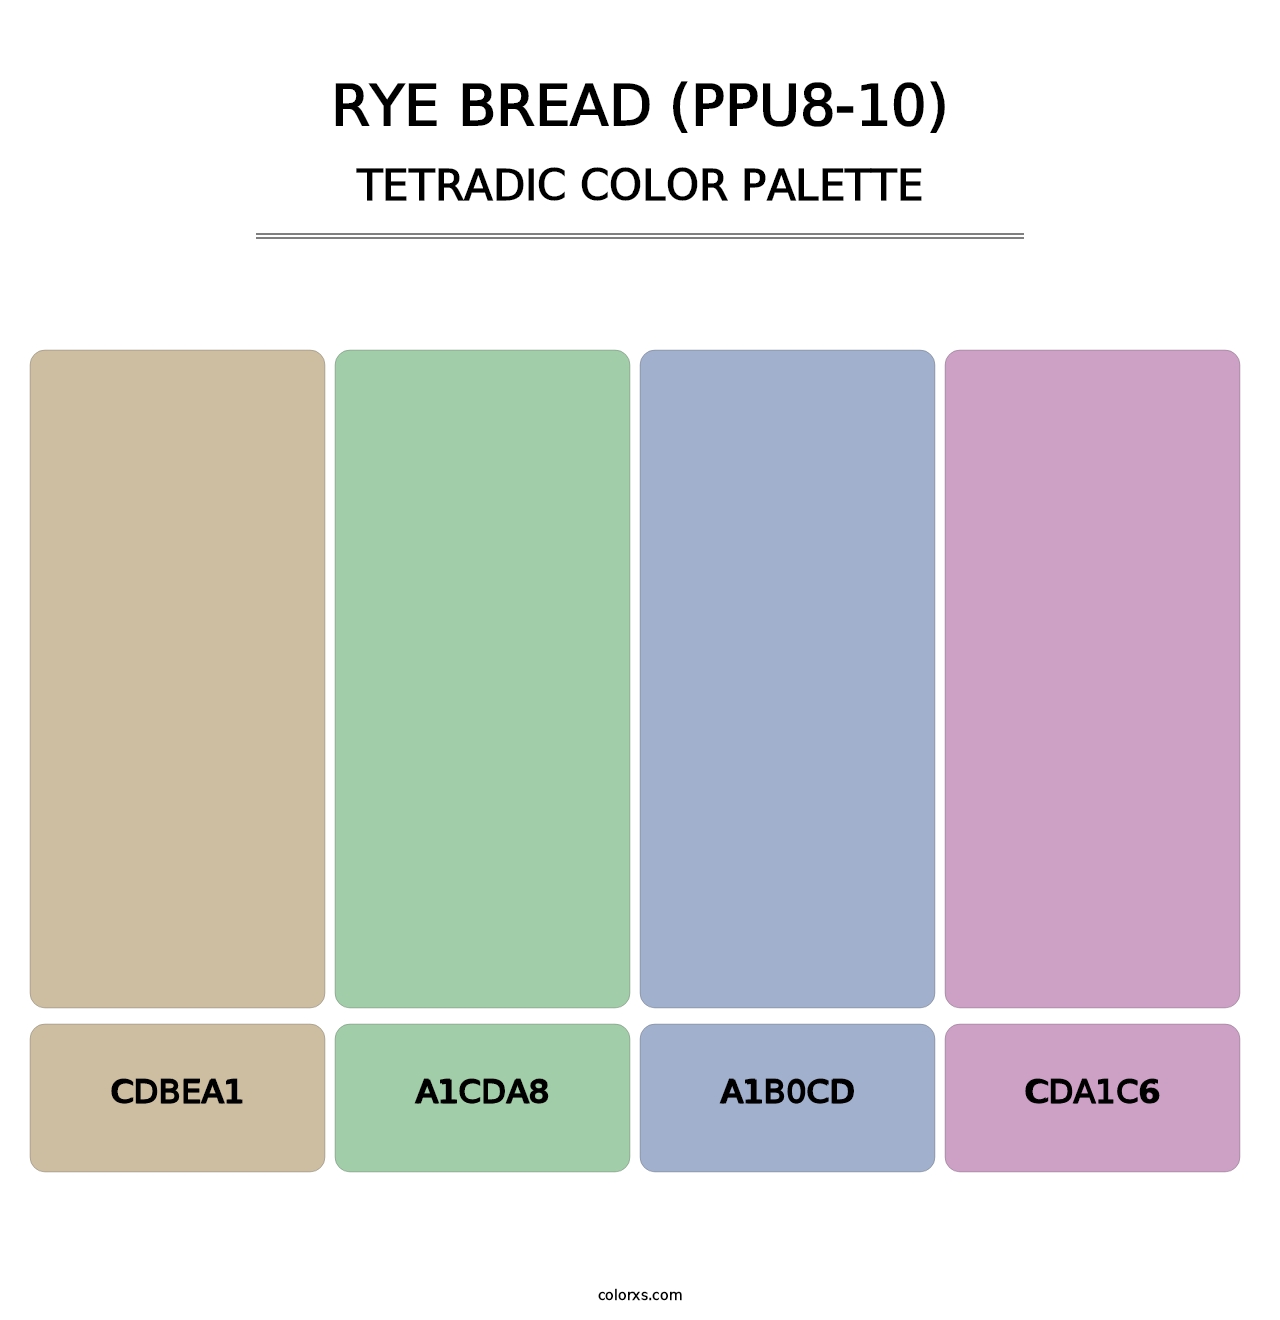 Rye Bread (PPU8-10) - Tetradic Color Palette